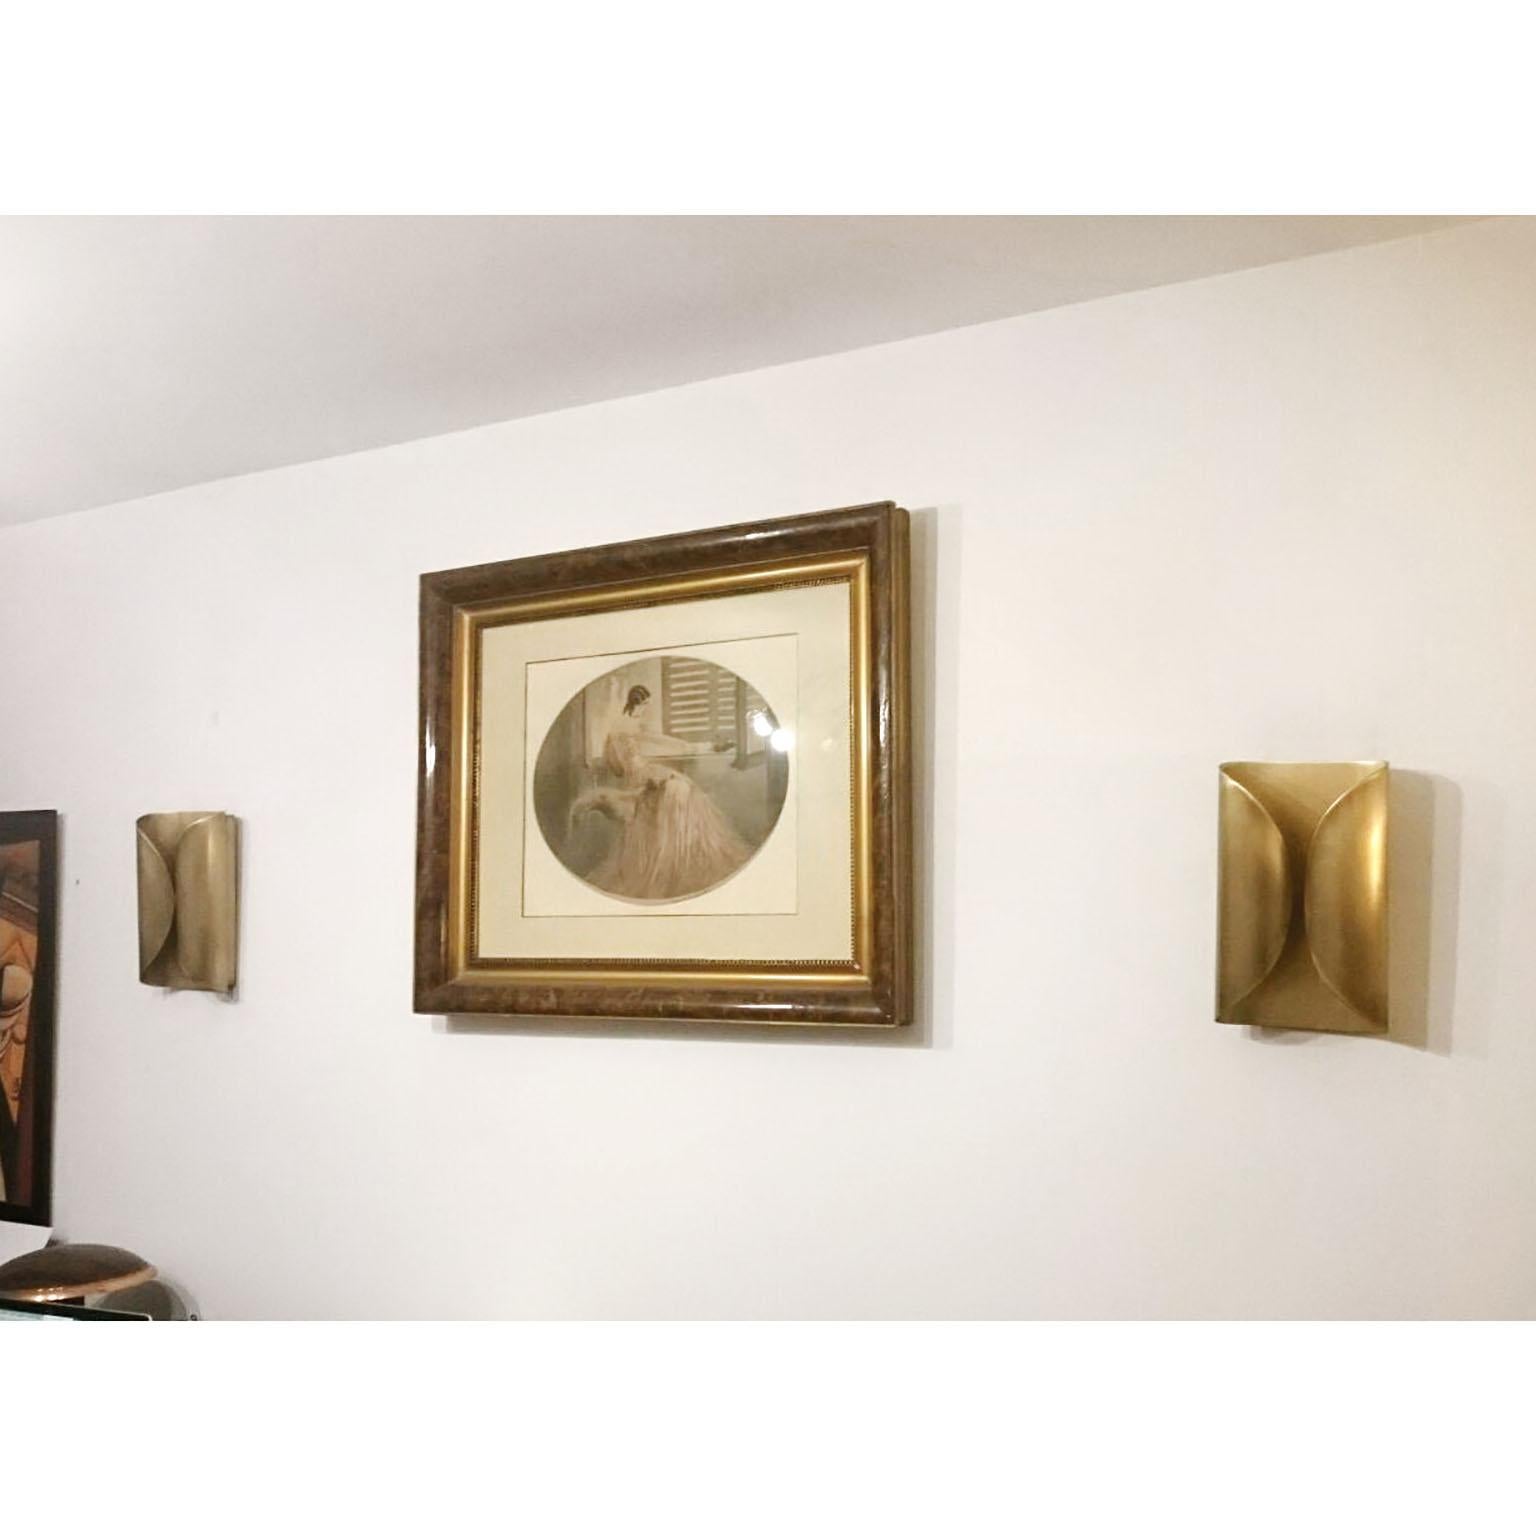 A sleek pair of Italian Mid-Century style wall lights in brass. 2xG9 light inside each light.
Dimensions:
21.5 x 35 x 10 cm (8.5 x 13.8 x 4 in.)